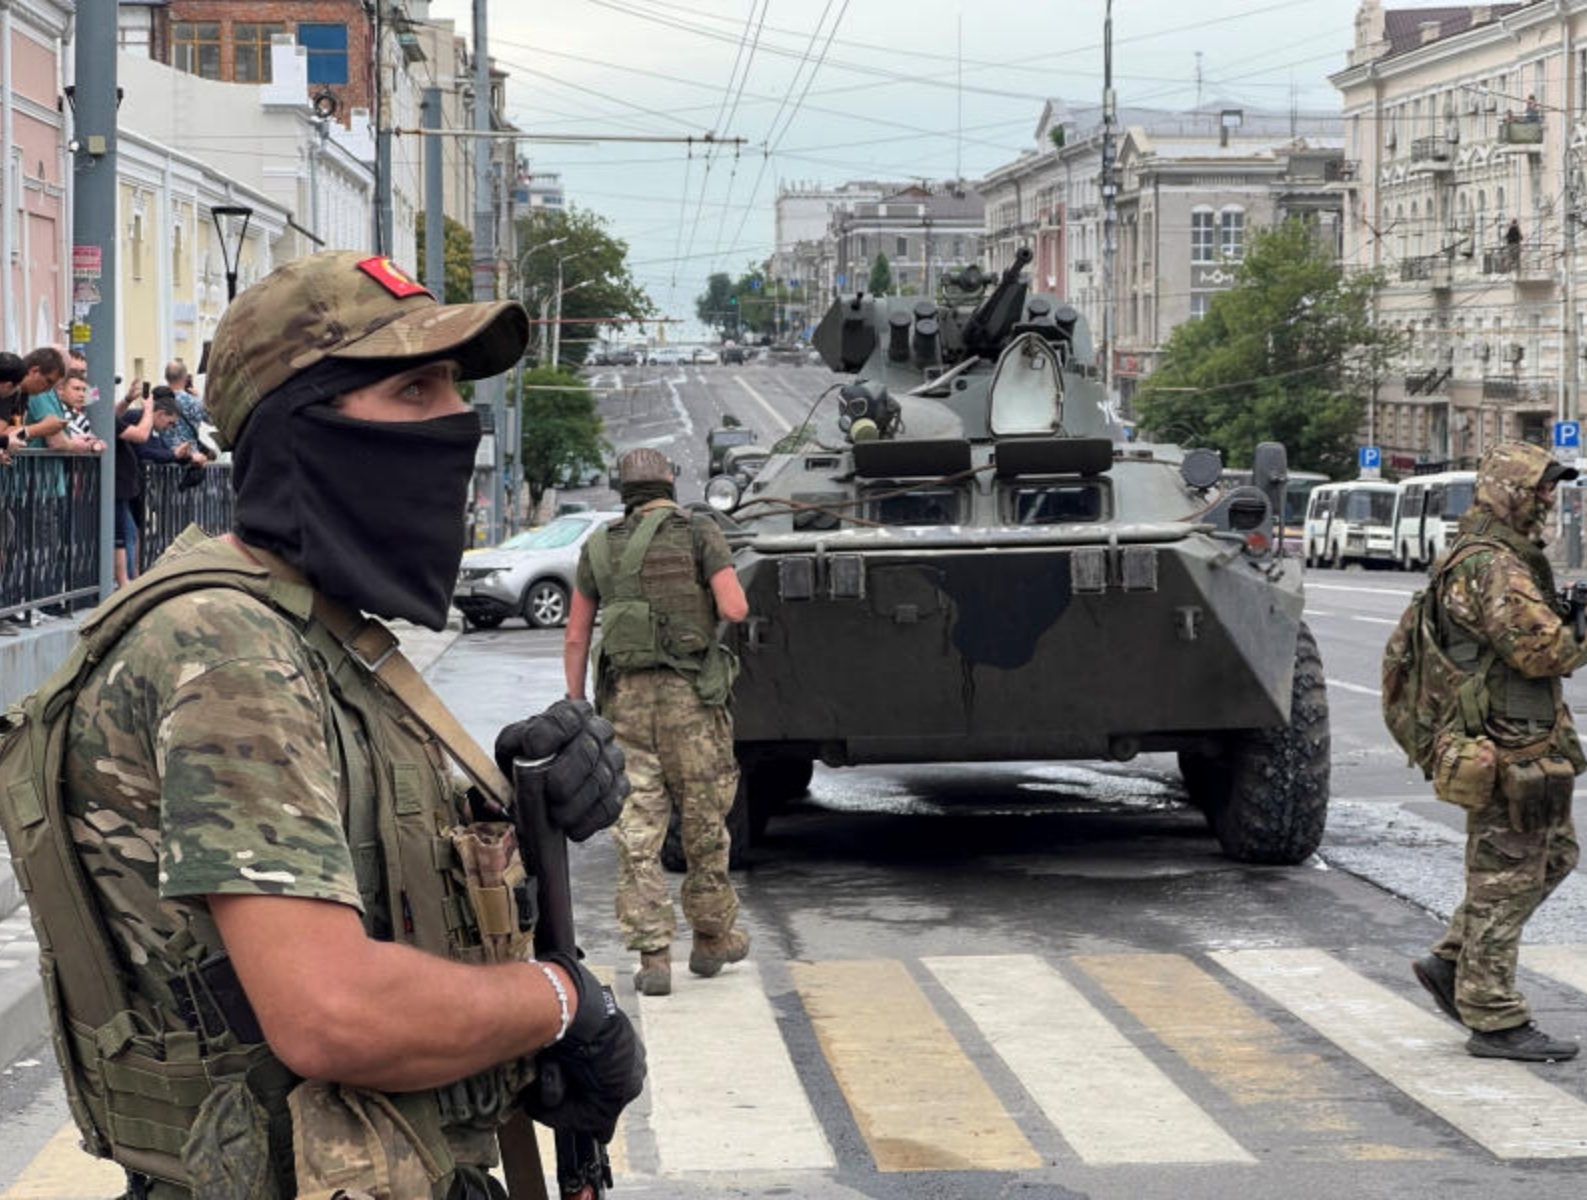 Putin's embarrassing one-tank parade hints at catastrophic losses in  Ukraine - Atlantic Council